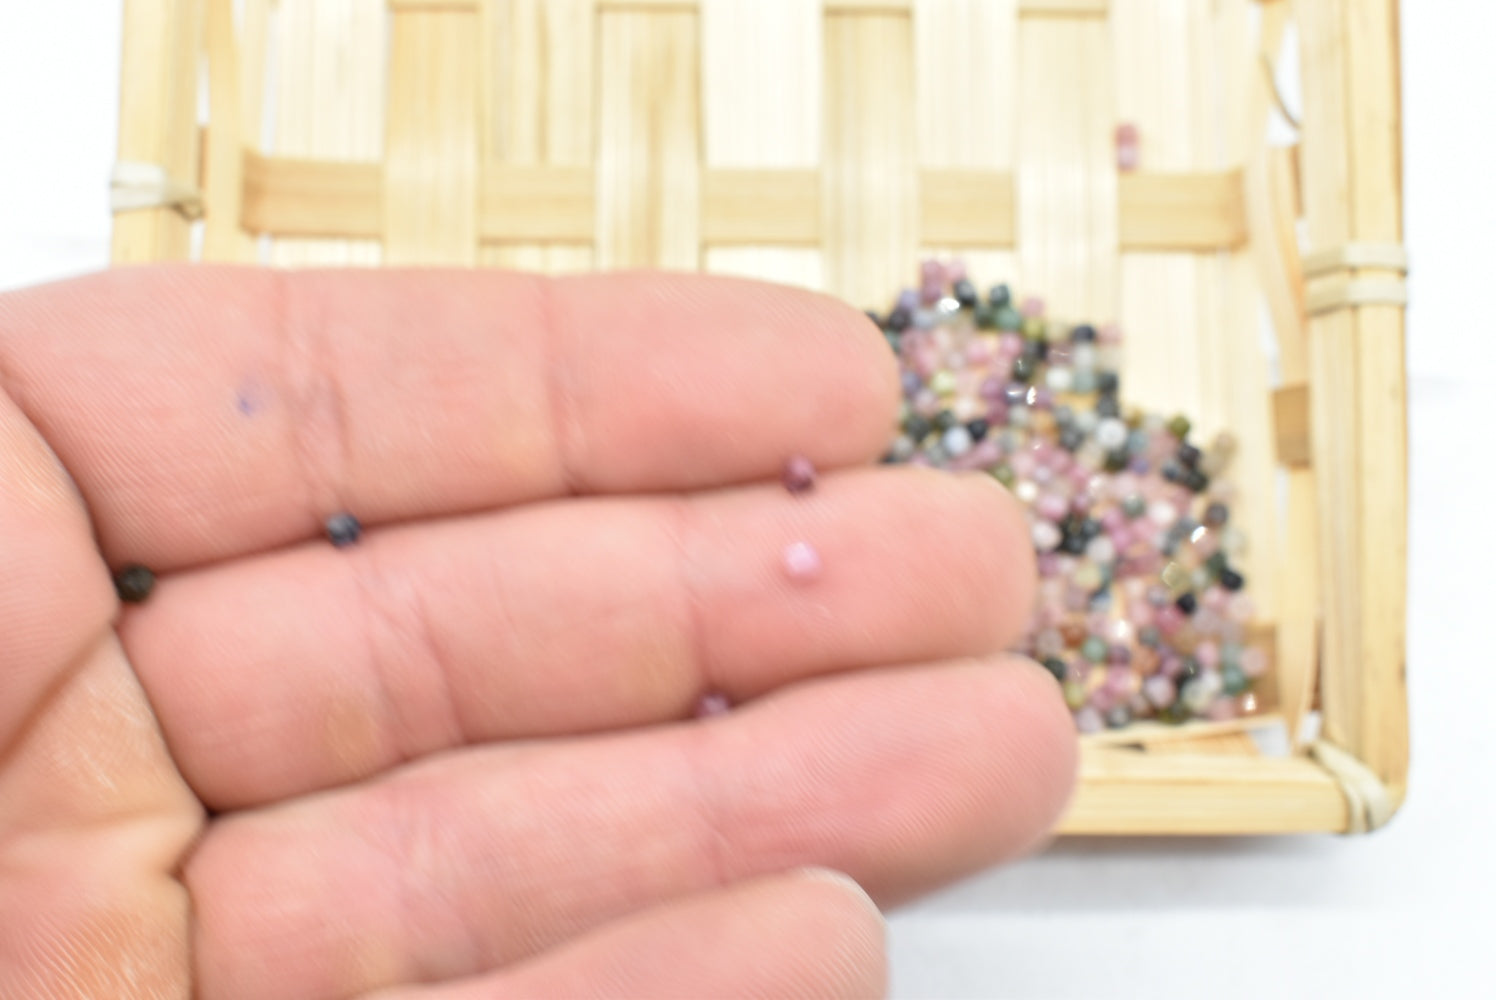 Tourmaline Beads 0.8-0.85 mm Perforated - 5 Beads